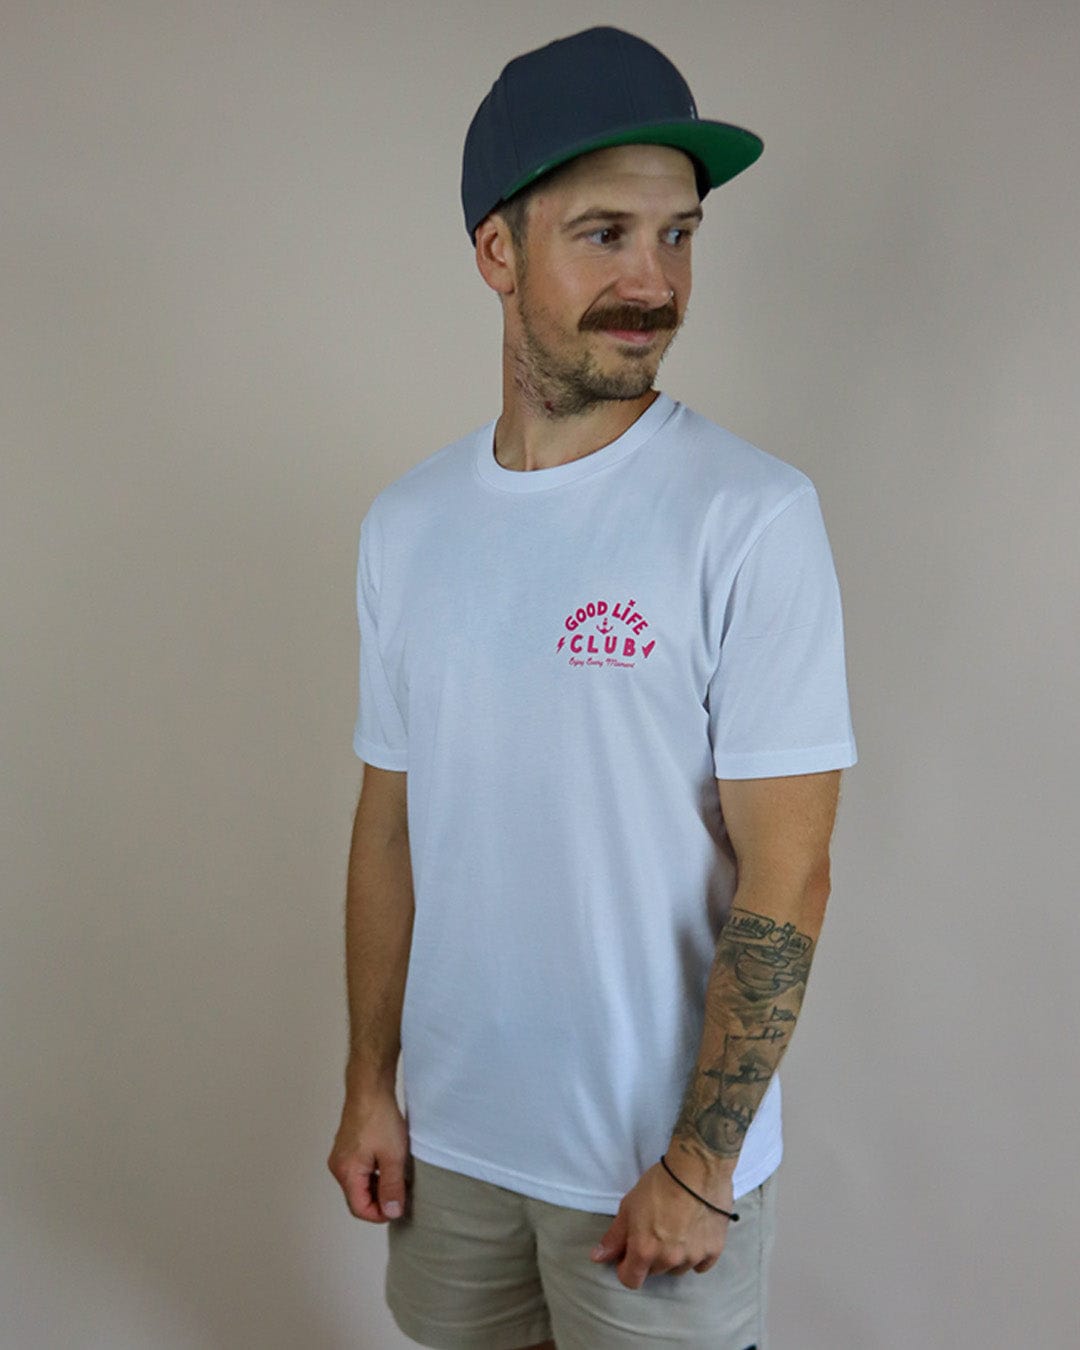 Good Life Club T-Shirt - White / Pink